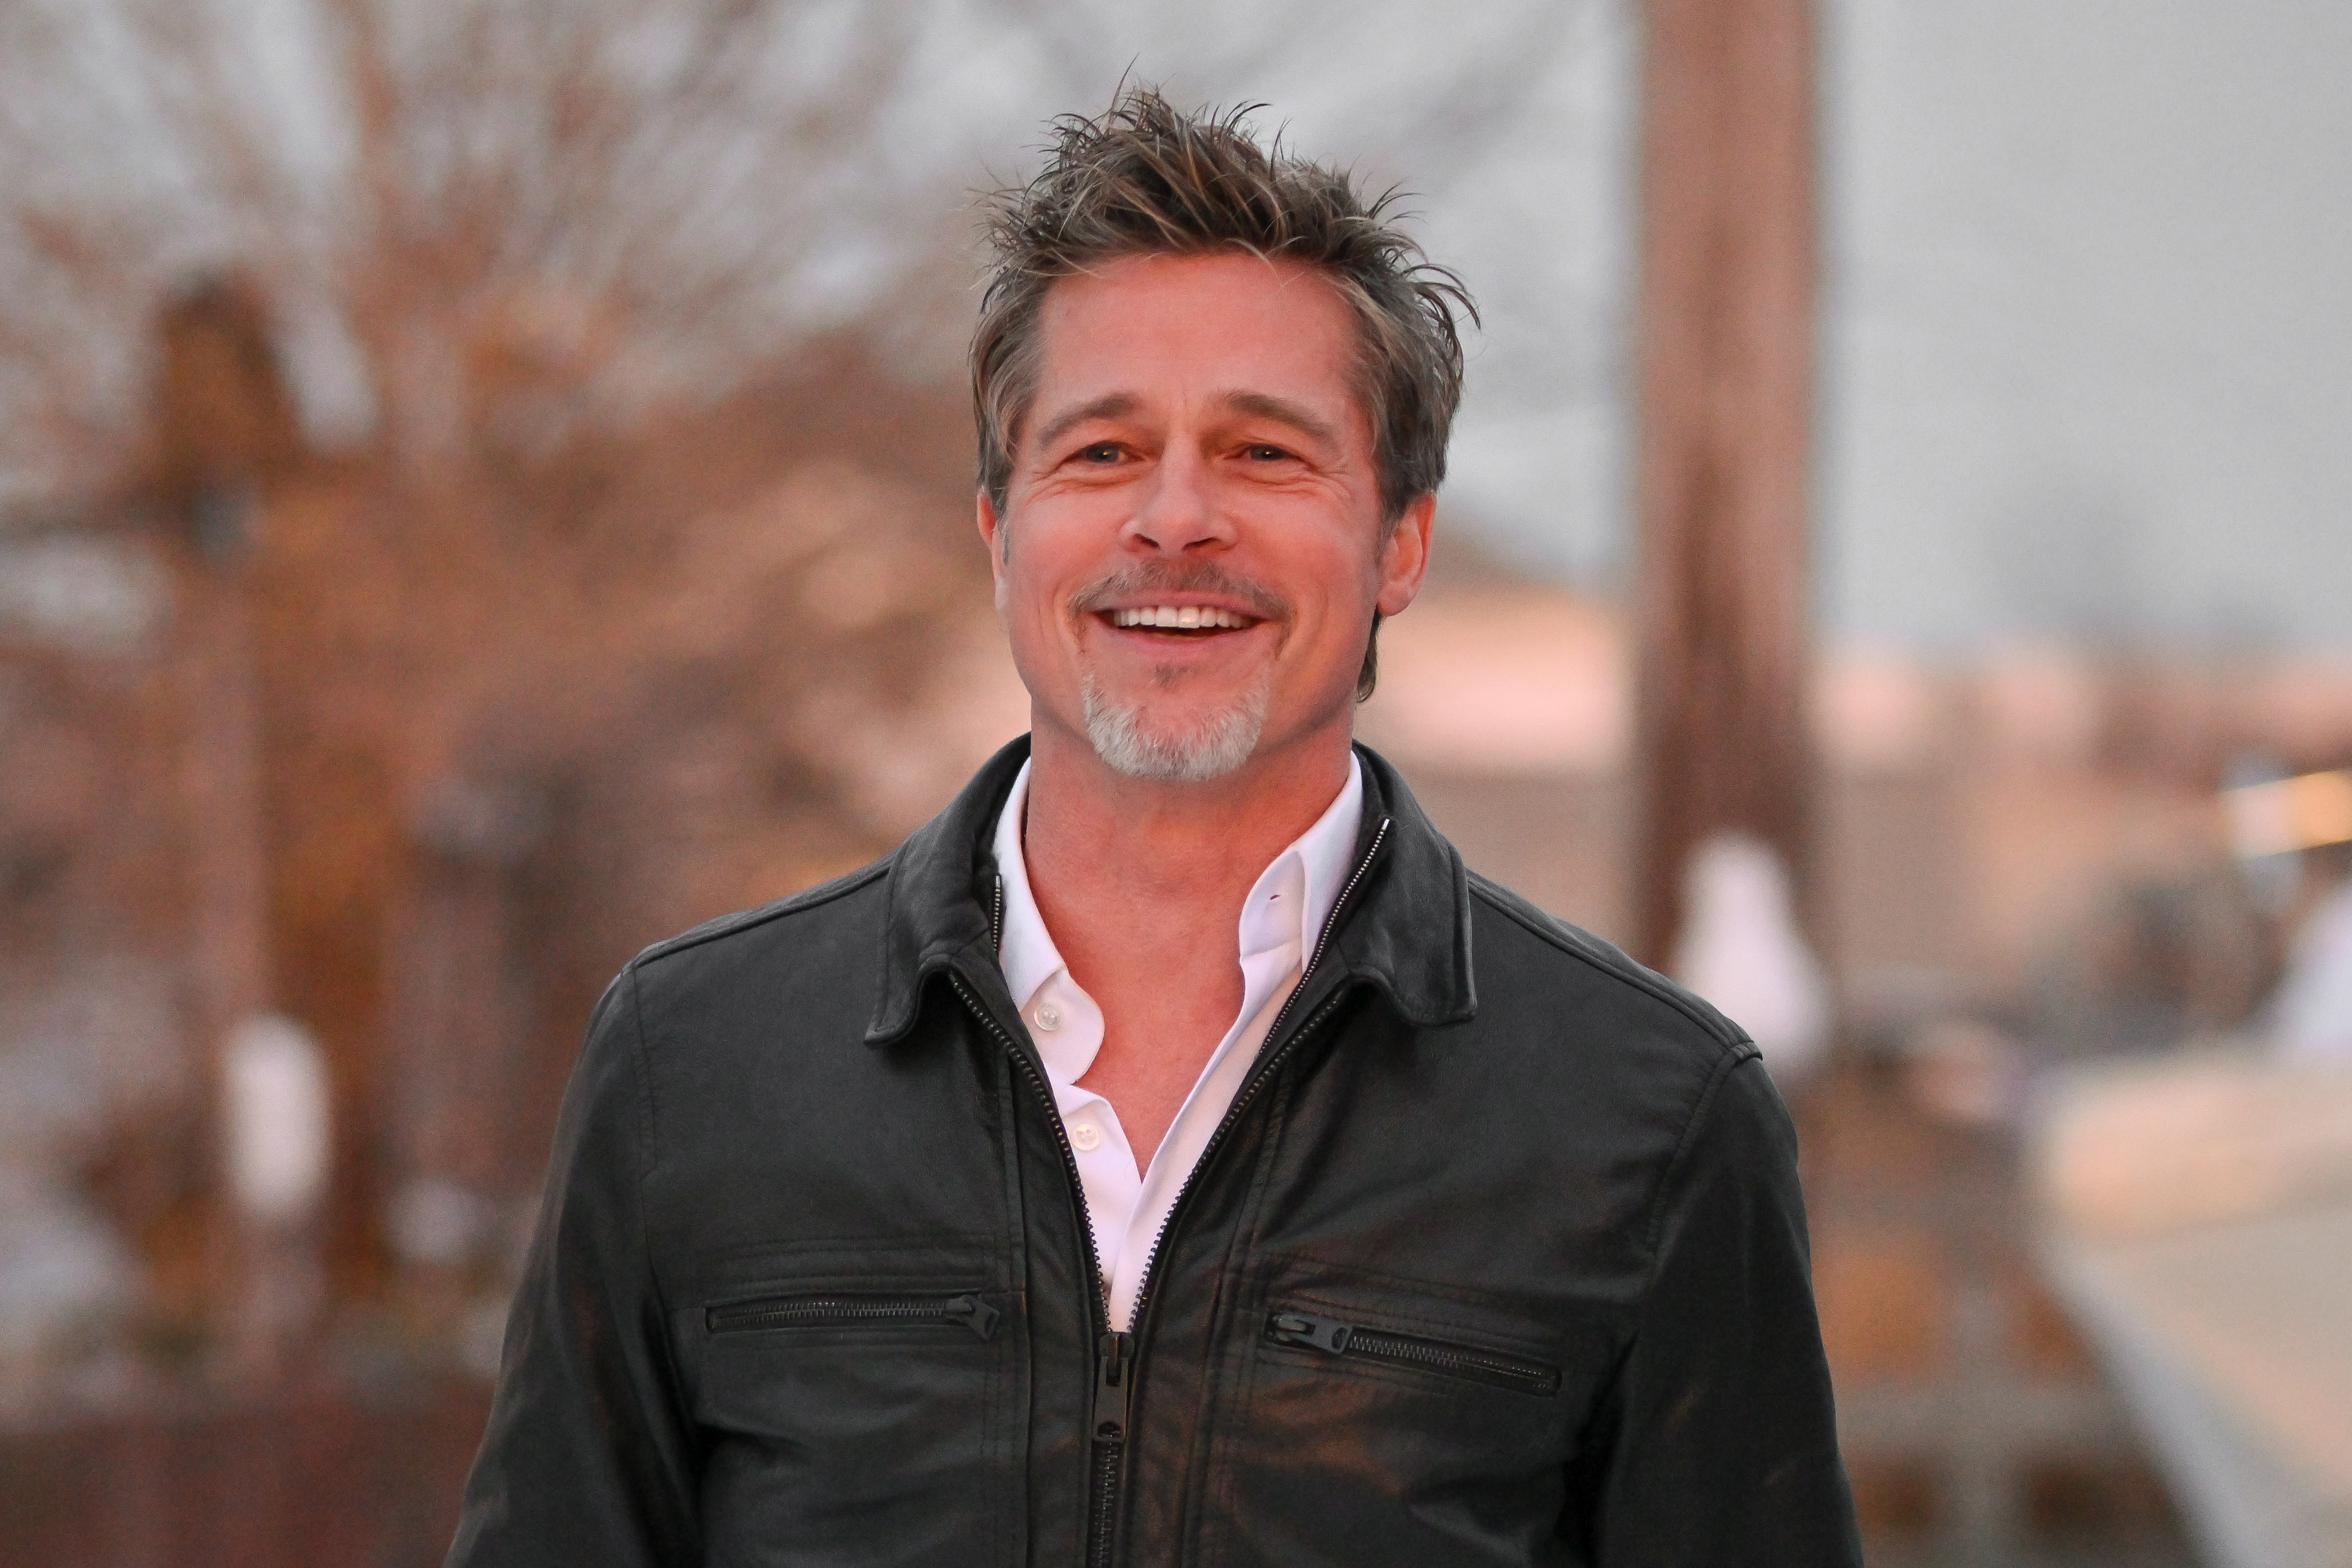 Brad Pitt am Set von "Wolves" in Old Howard Beach am 13. Februar 2023, in New York City. | Quelle: Getty Images